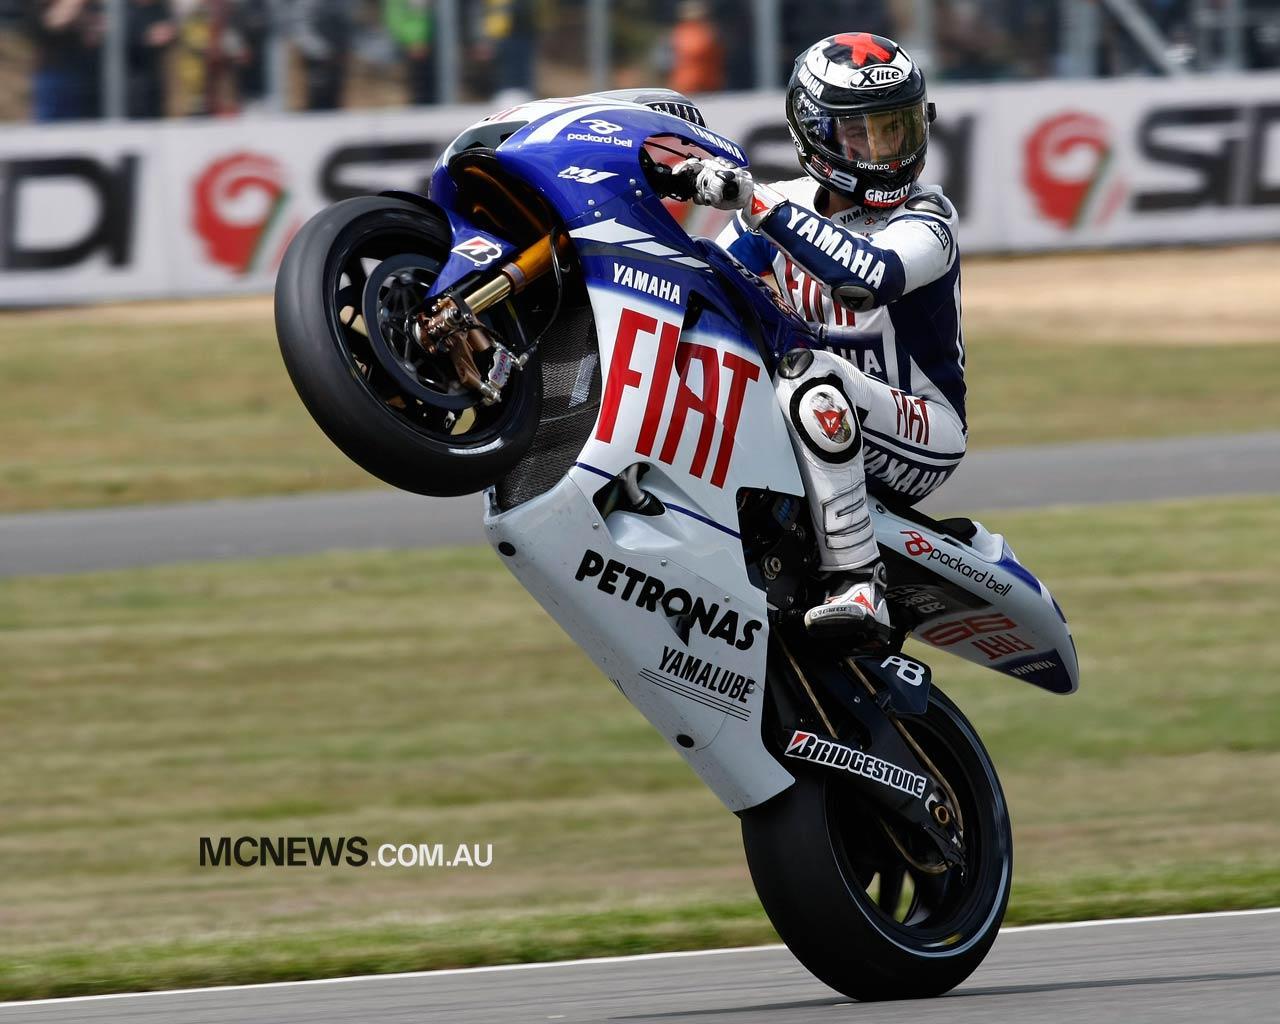 Jorge Lorenzo Winner of Catalunya MotoGP 2014 Wallpaper Gallery